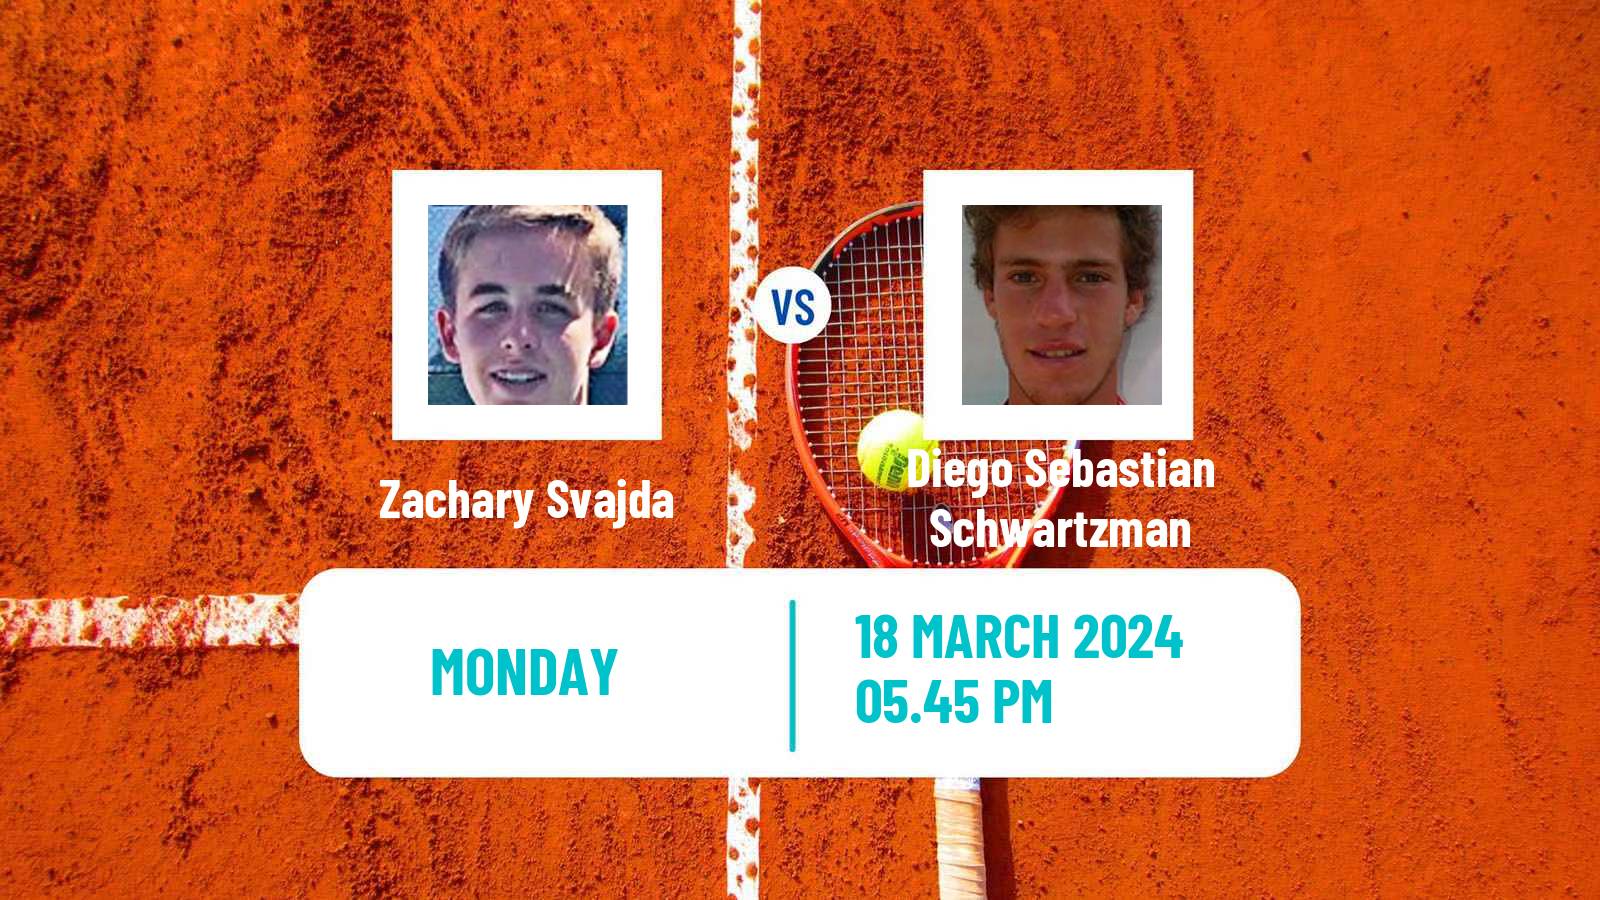 Tennis ATP Miami Zachary Svajda - Diego Sebastian Schwartzman